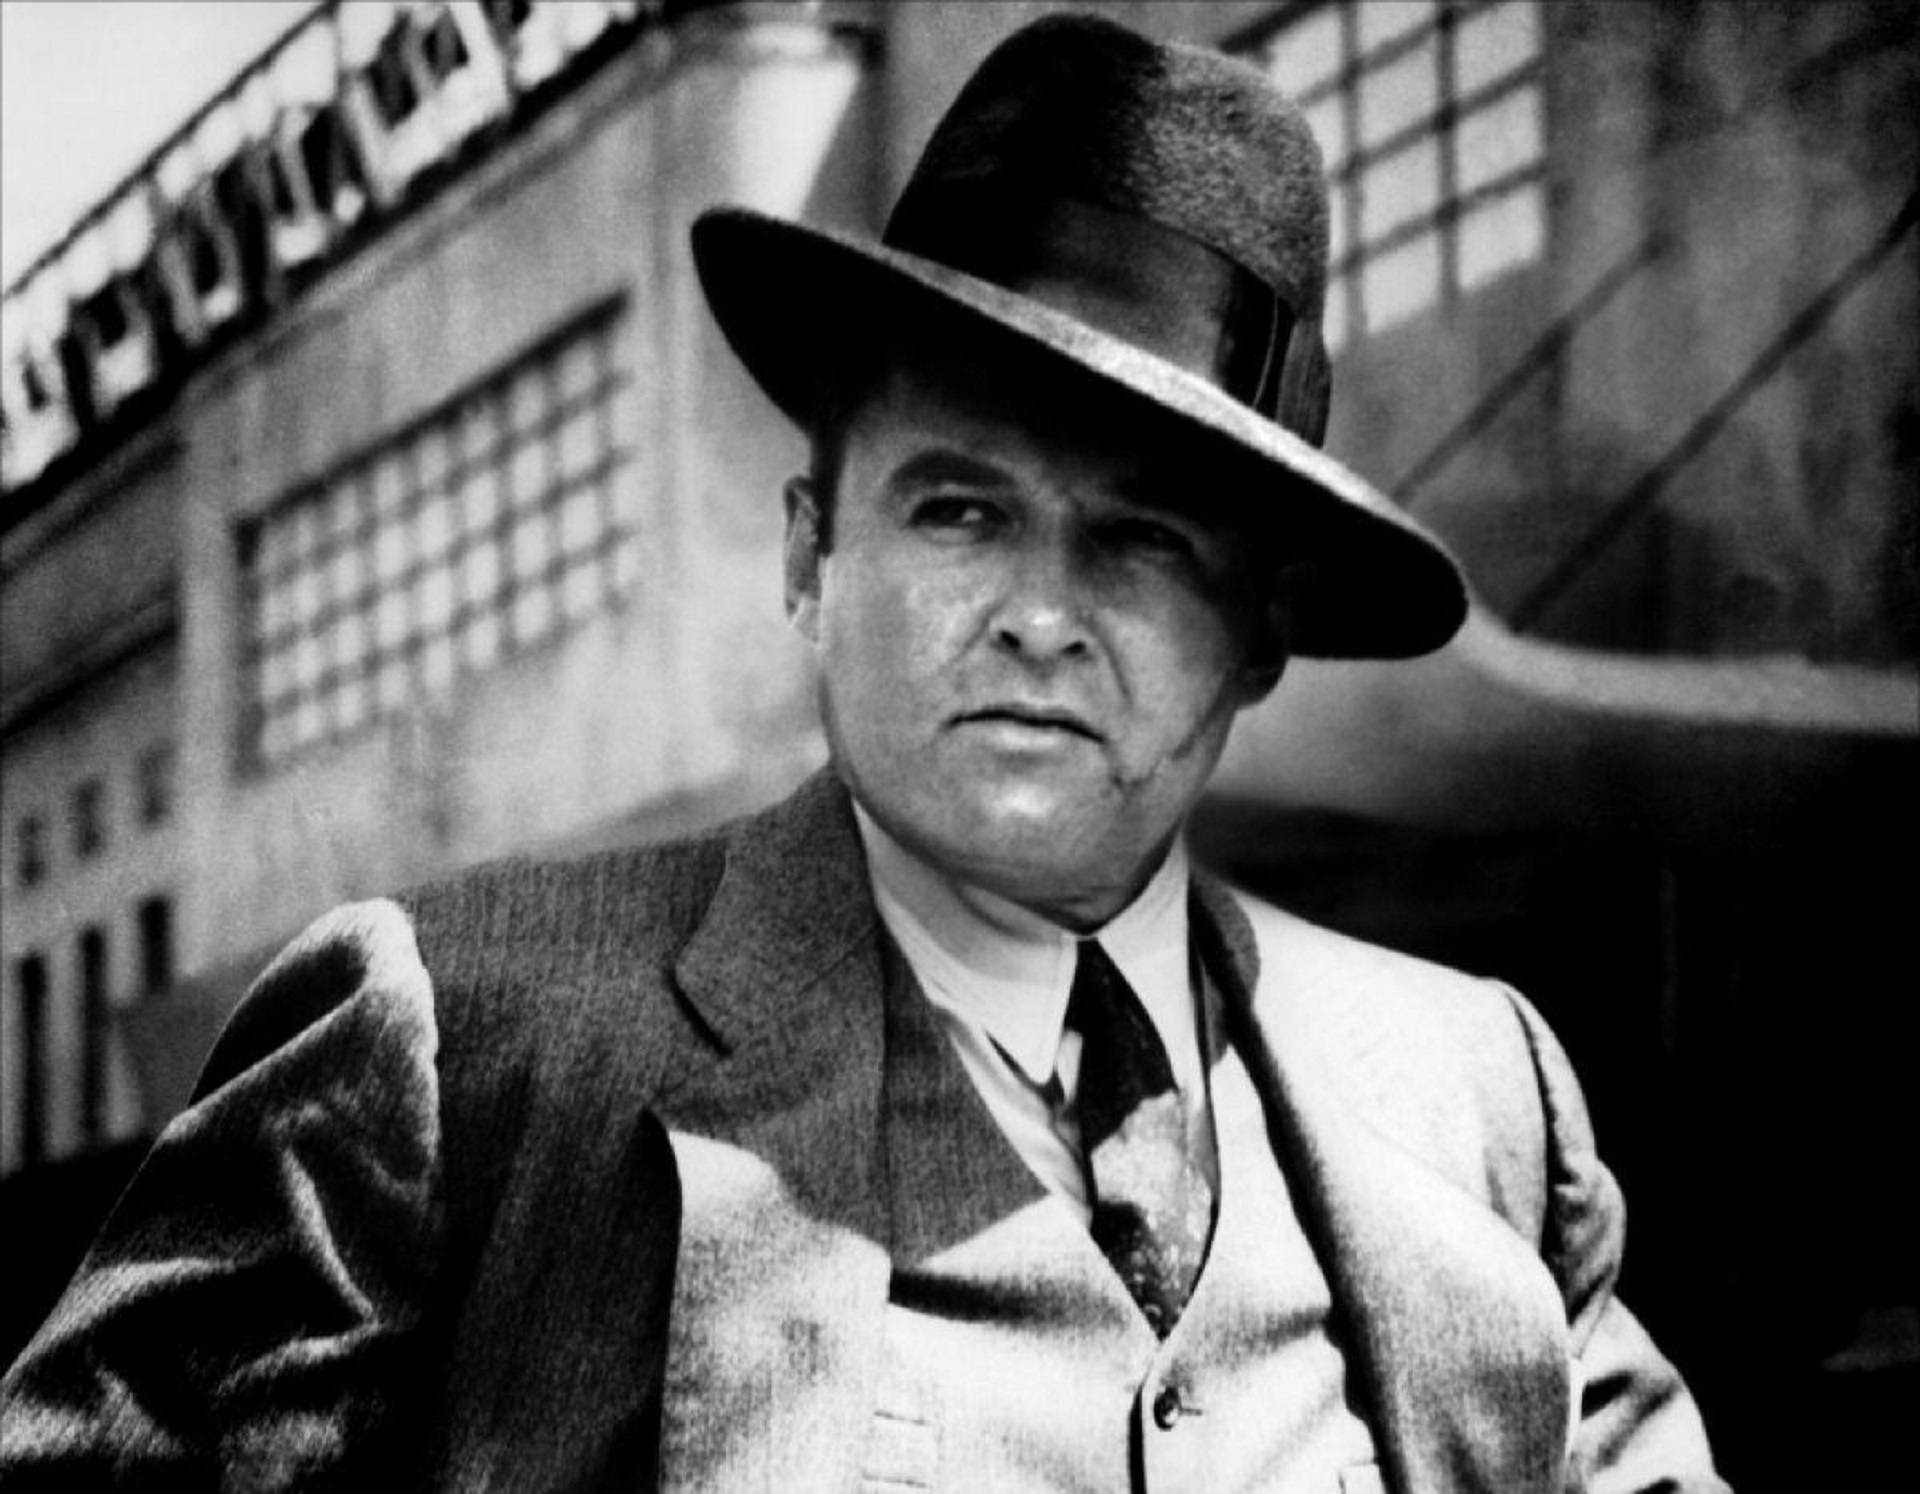 Al Capone Wallpapers